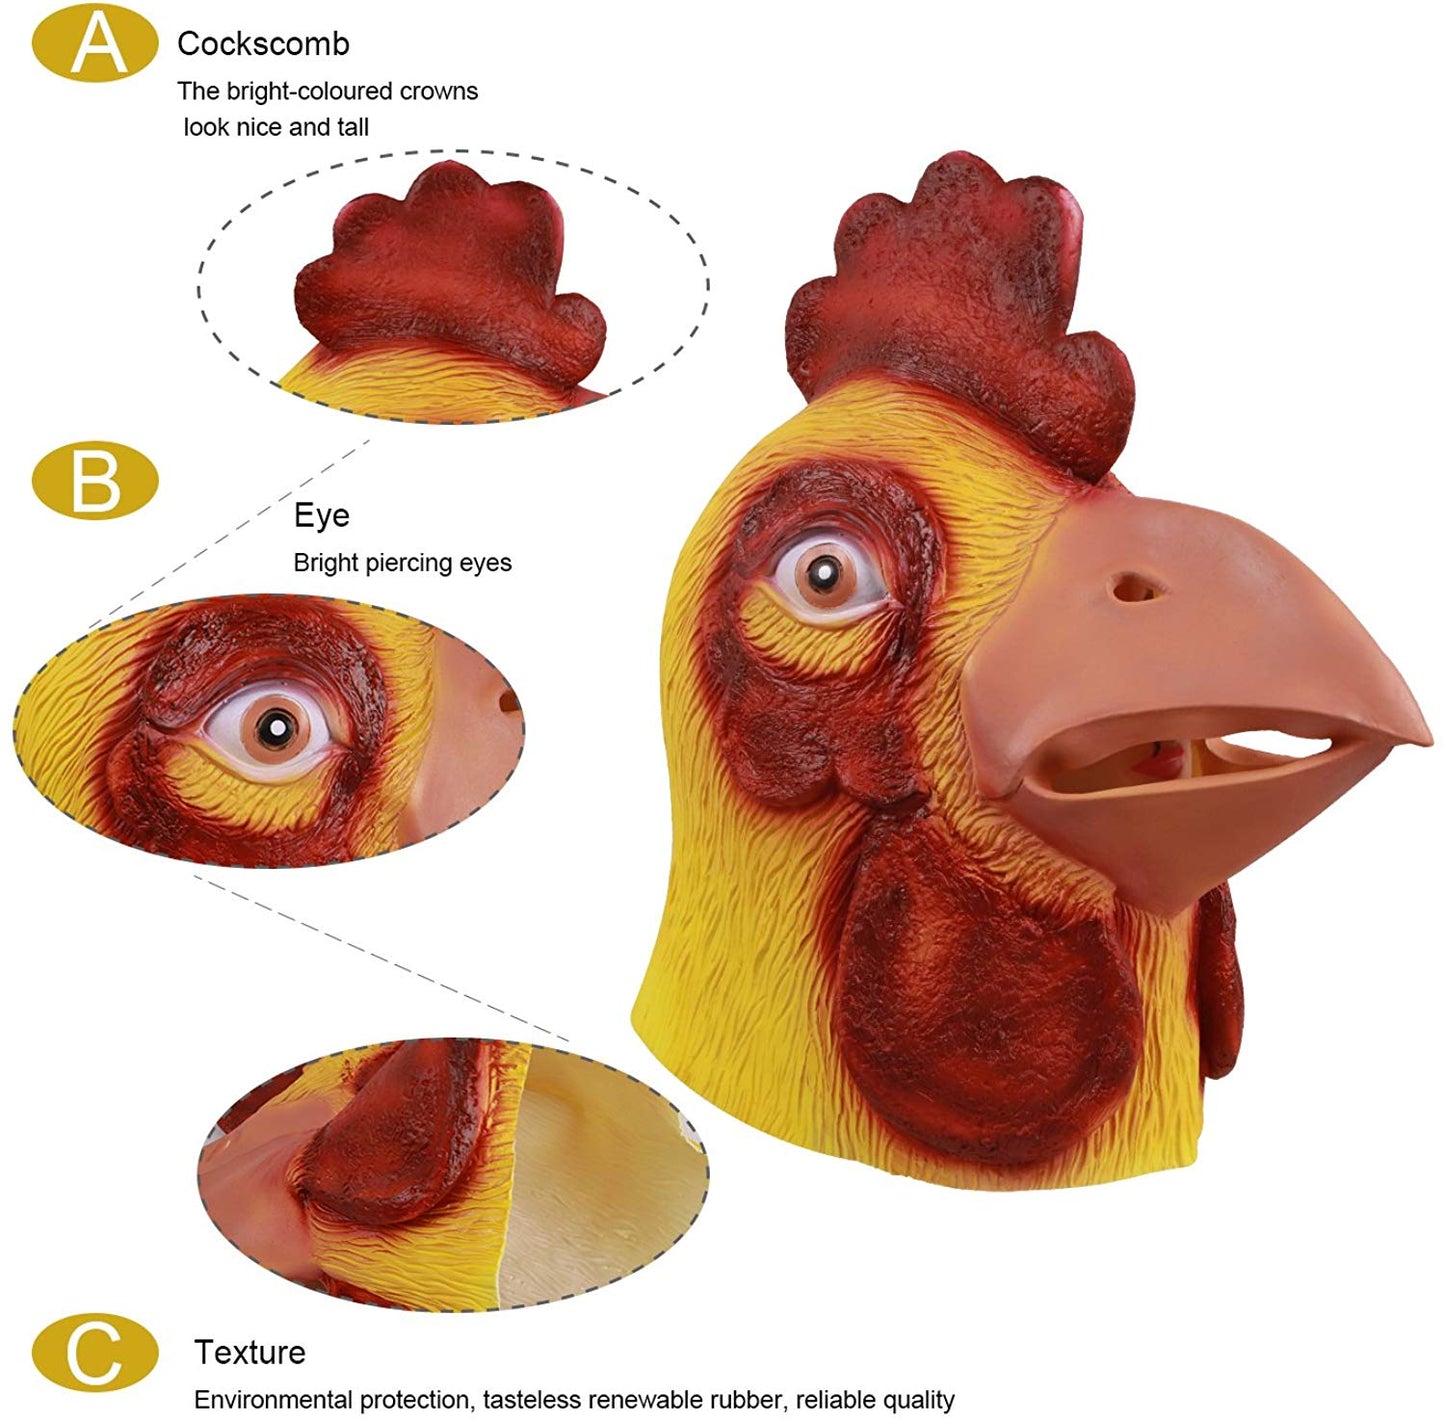 Chicken Mask - oddgifts.com